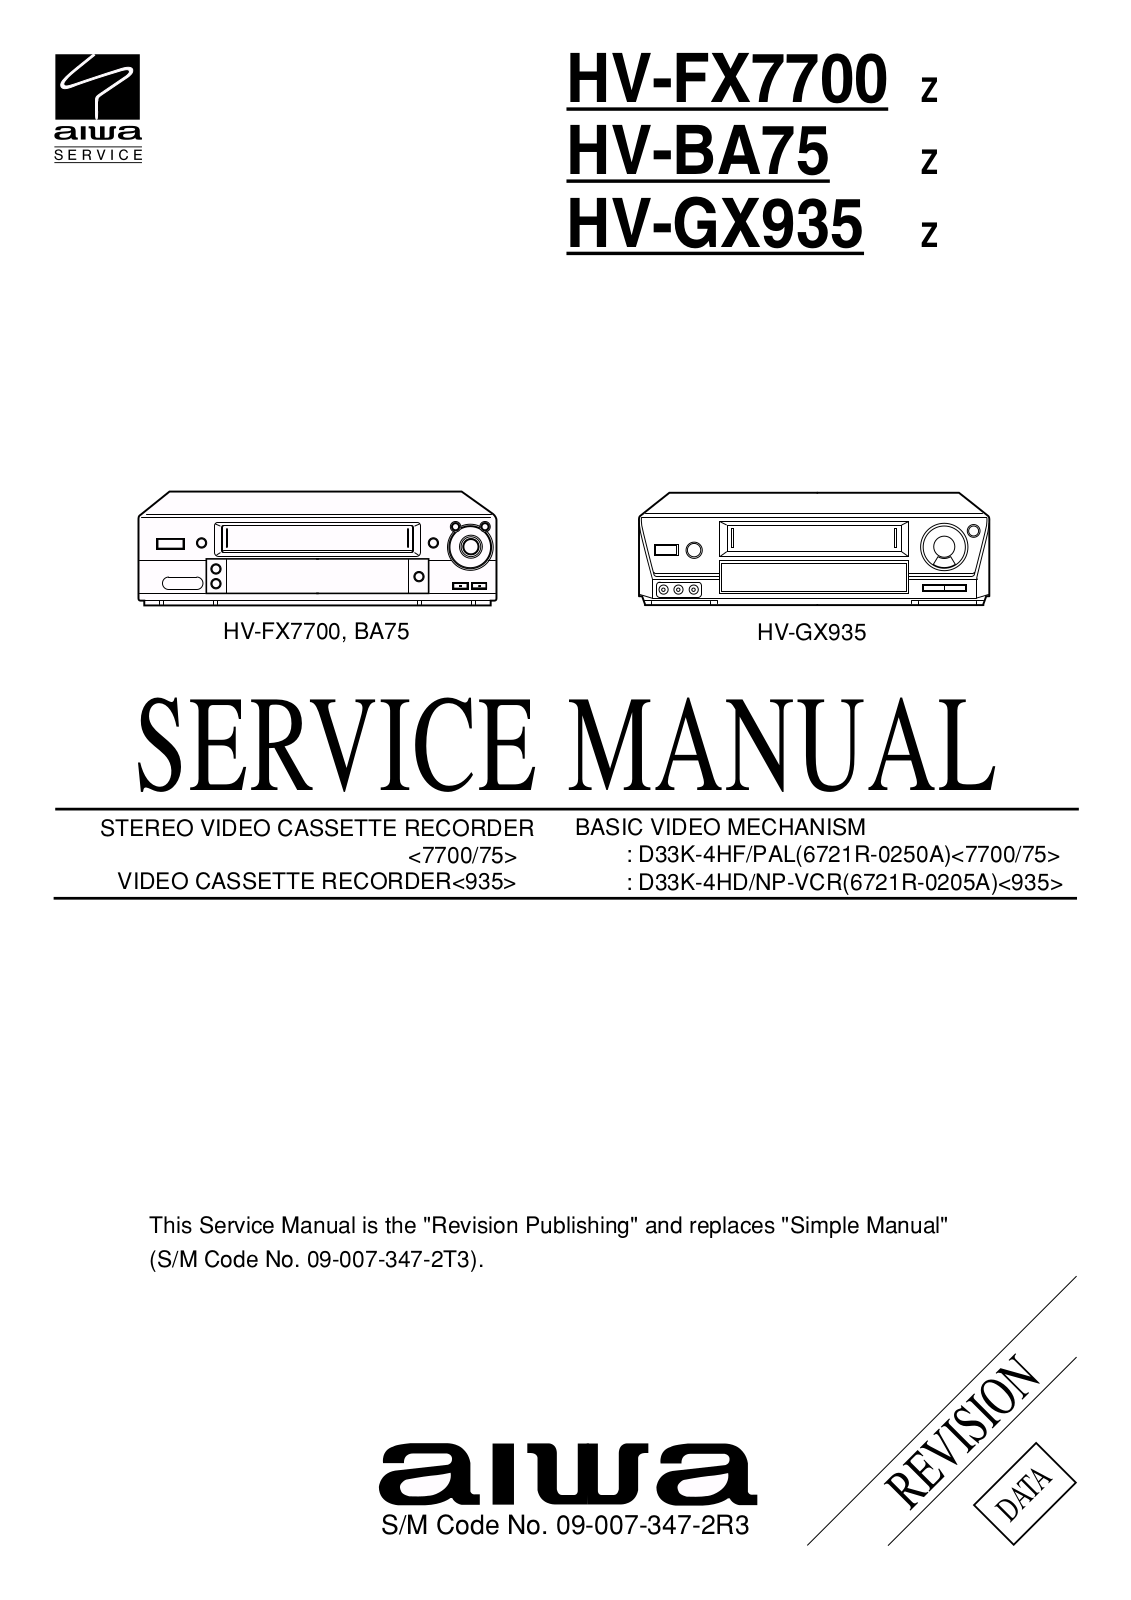 Aiwa HV-FX7700 Service Manual